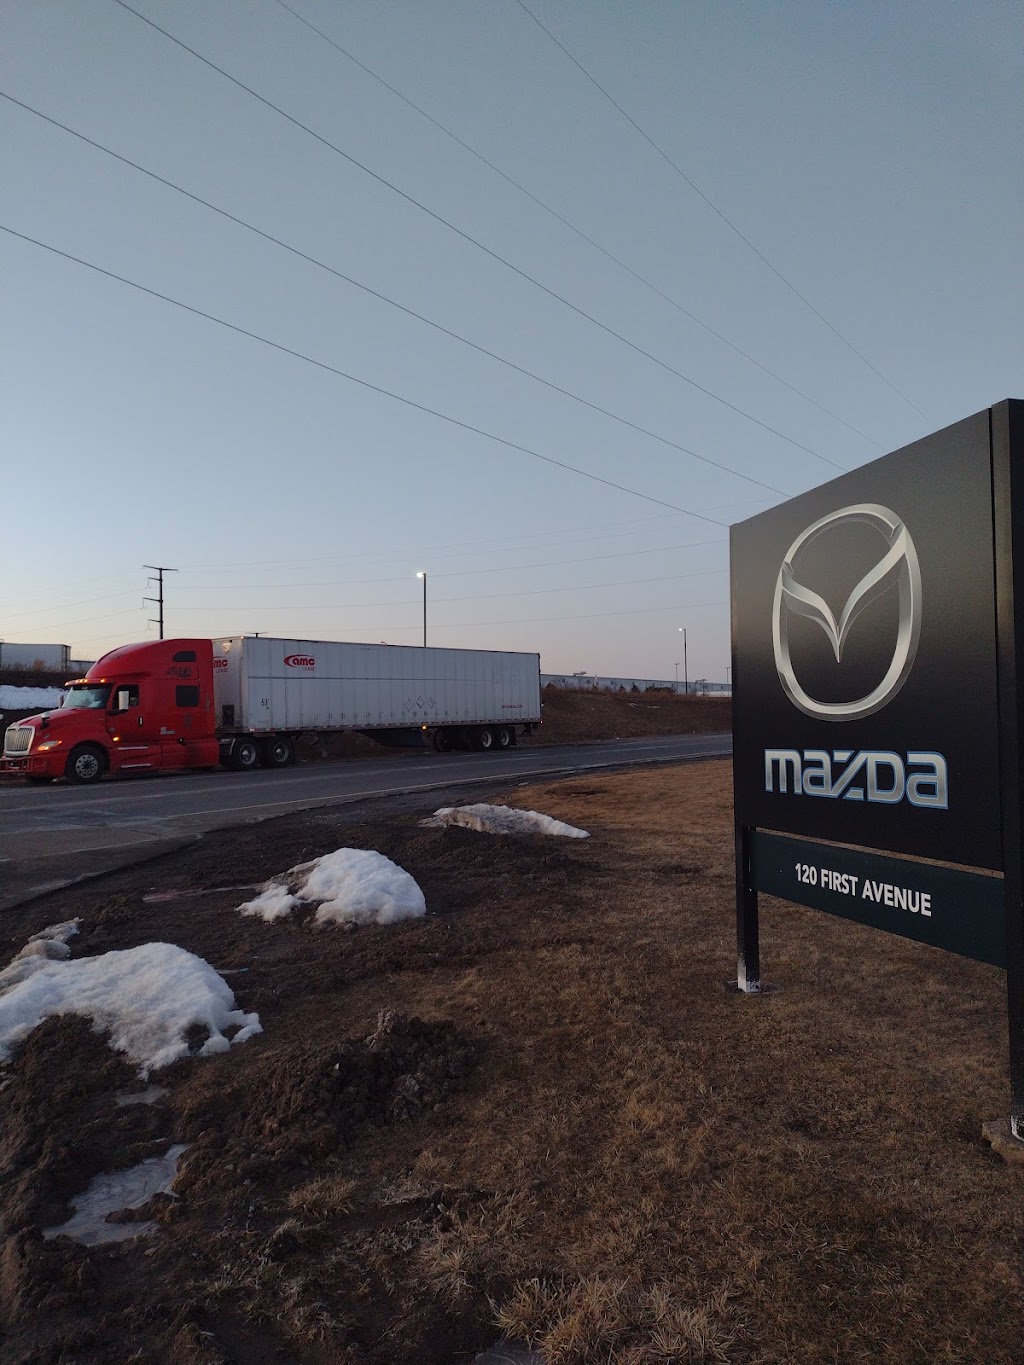 Mazda | 120 First Ave, Covington Township, PA 18424 | Phone: (877) 727-6626